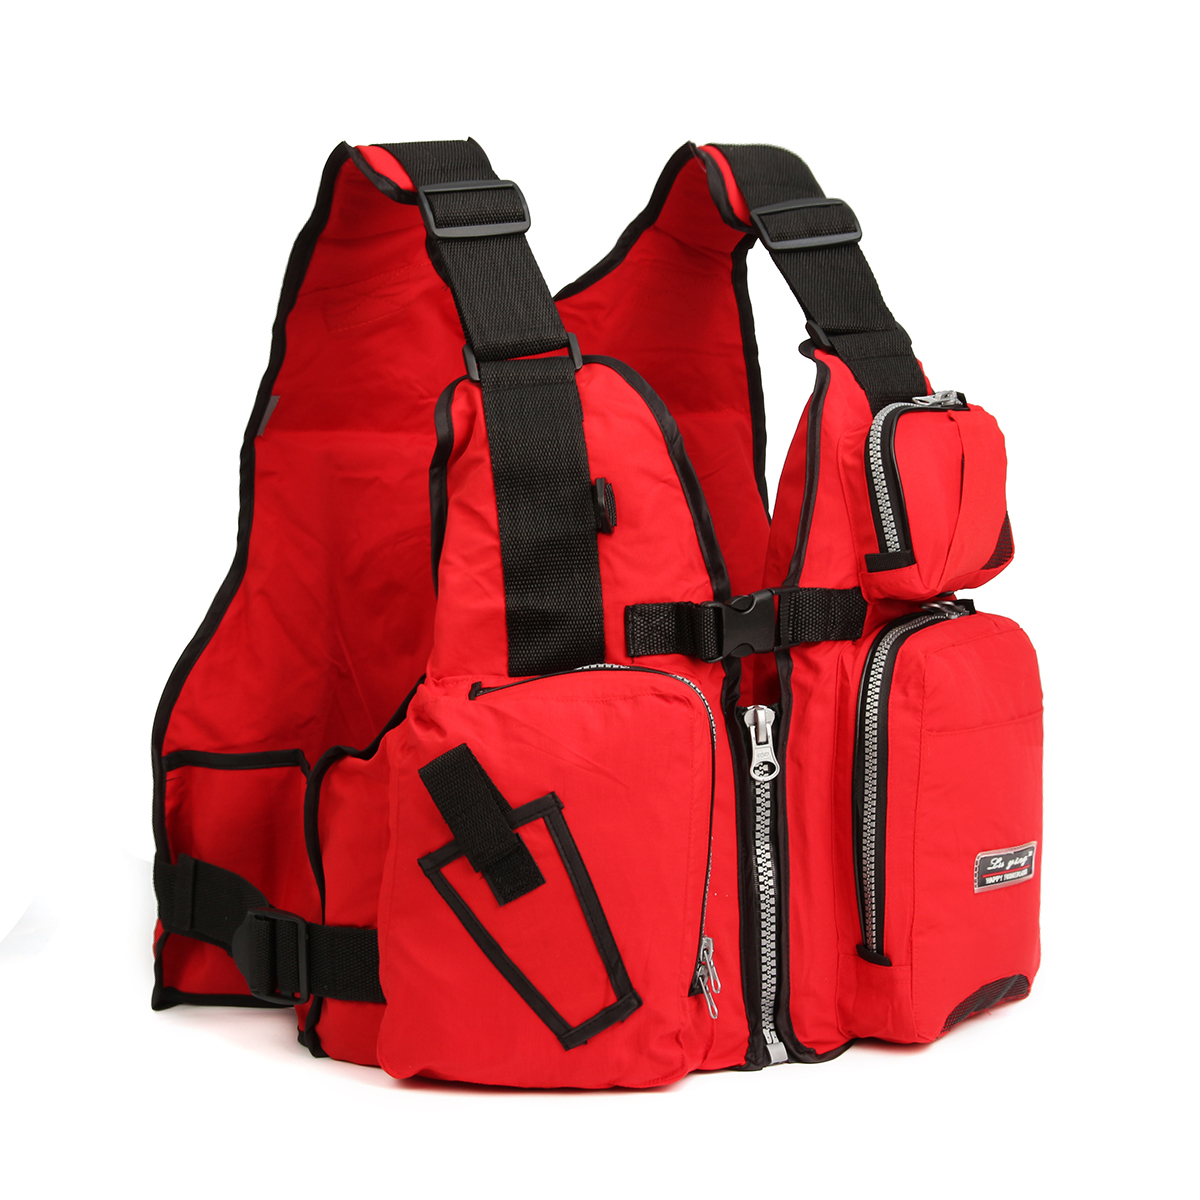 Outdoor Life Jackets for Adult kayaking, Multi-Pockets & Reflective Belt, Adjustable Life Vests for Adults, Safe Aid Jacket, Buoyancy Waistcoat, Swim Vest for Canoe Dinghy, Sailing - image 5 of 8